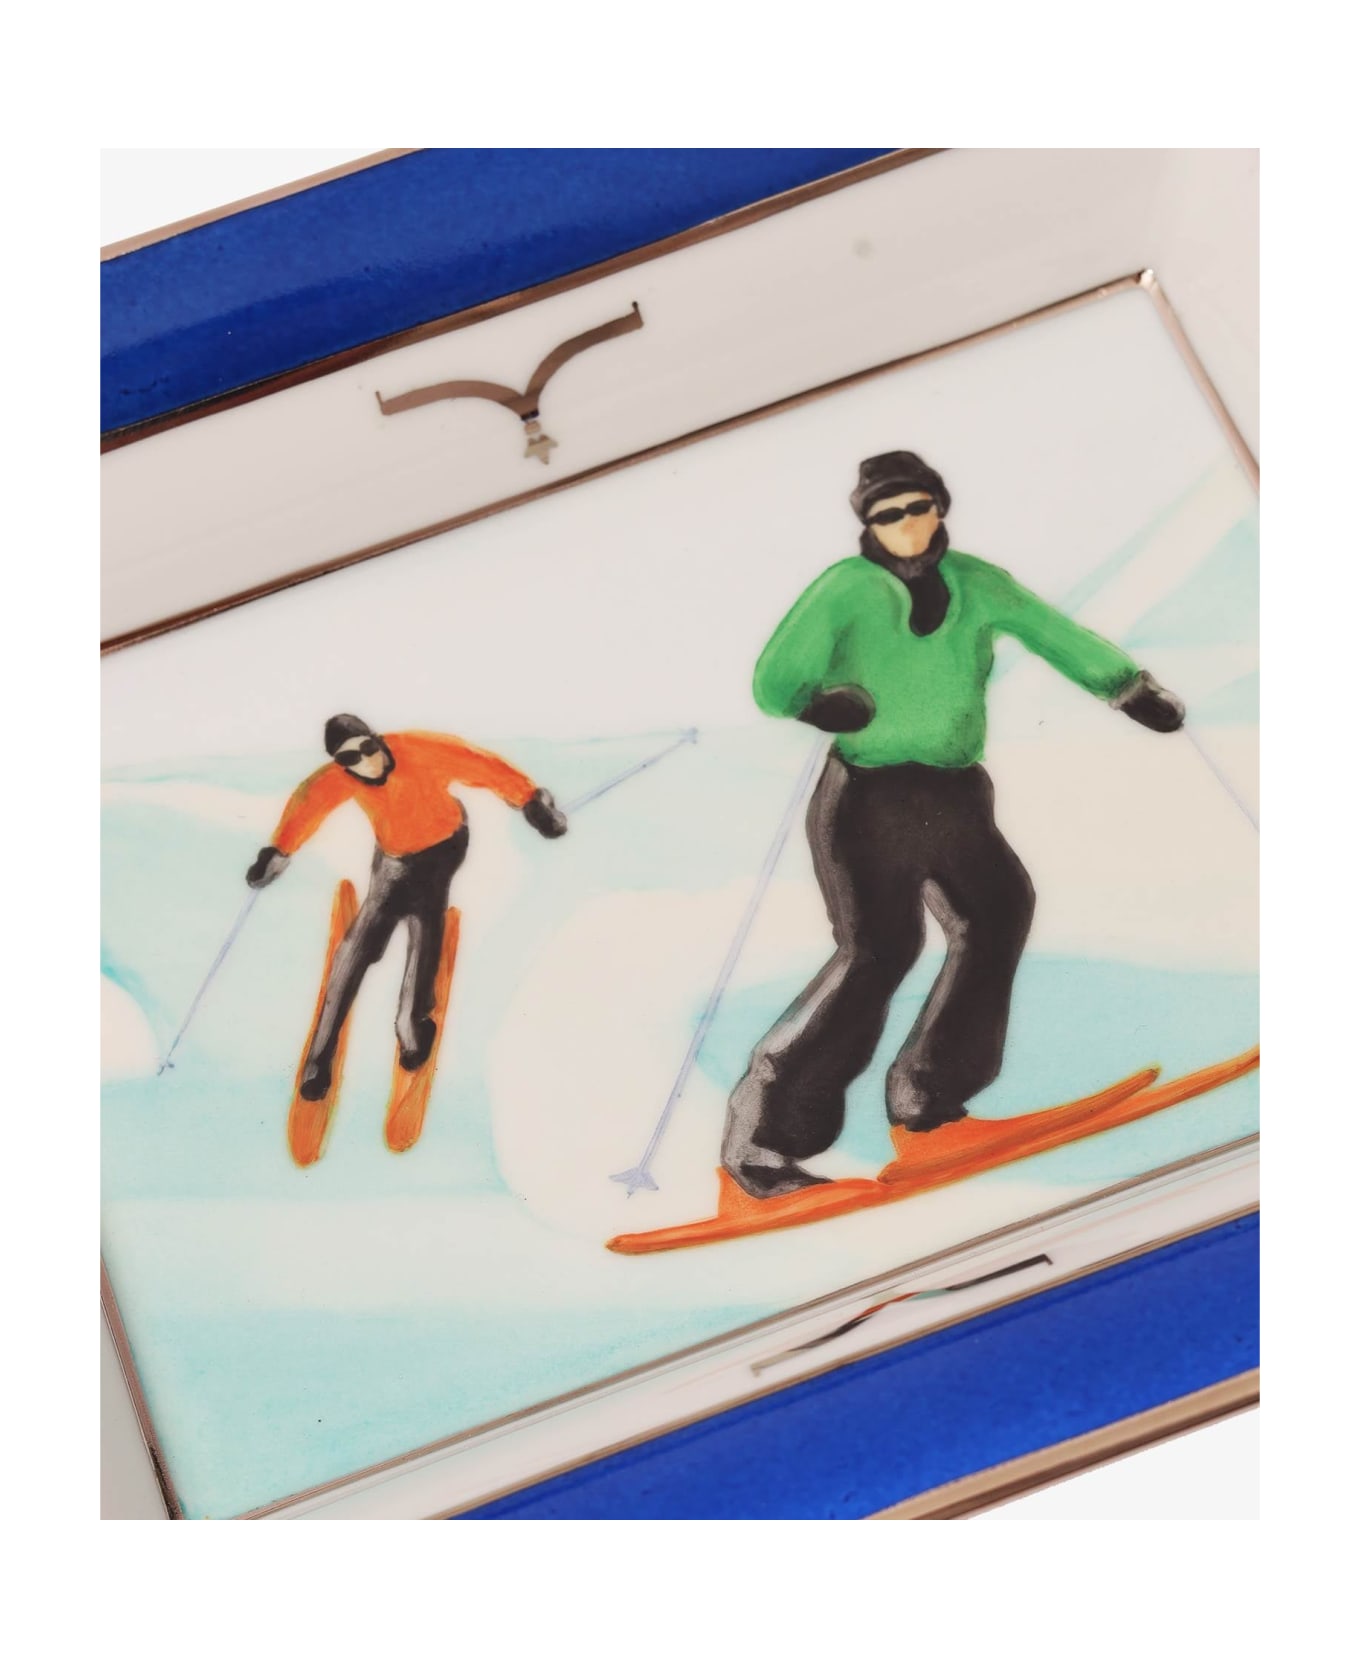 Larusmiani Pocket Emptier Ski Collection  - Neutral インテリア雑貨